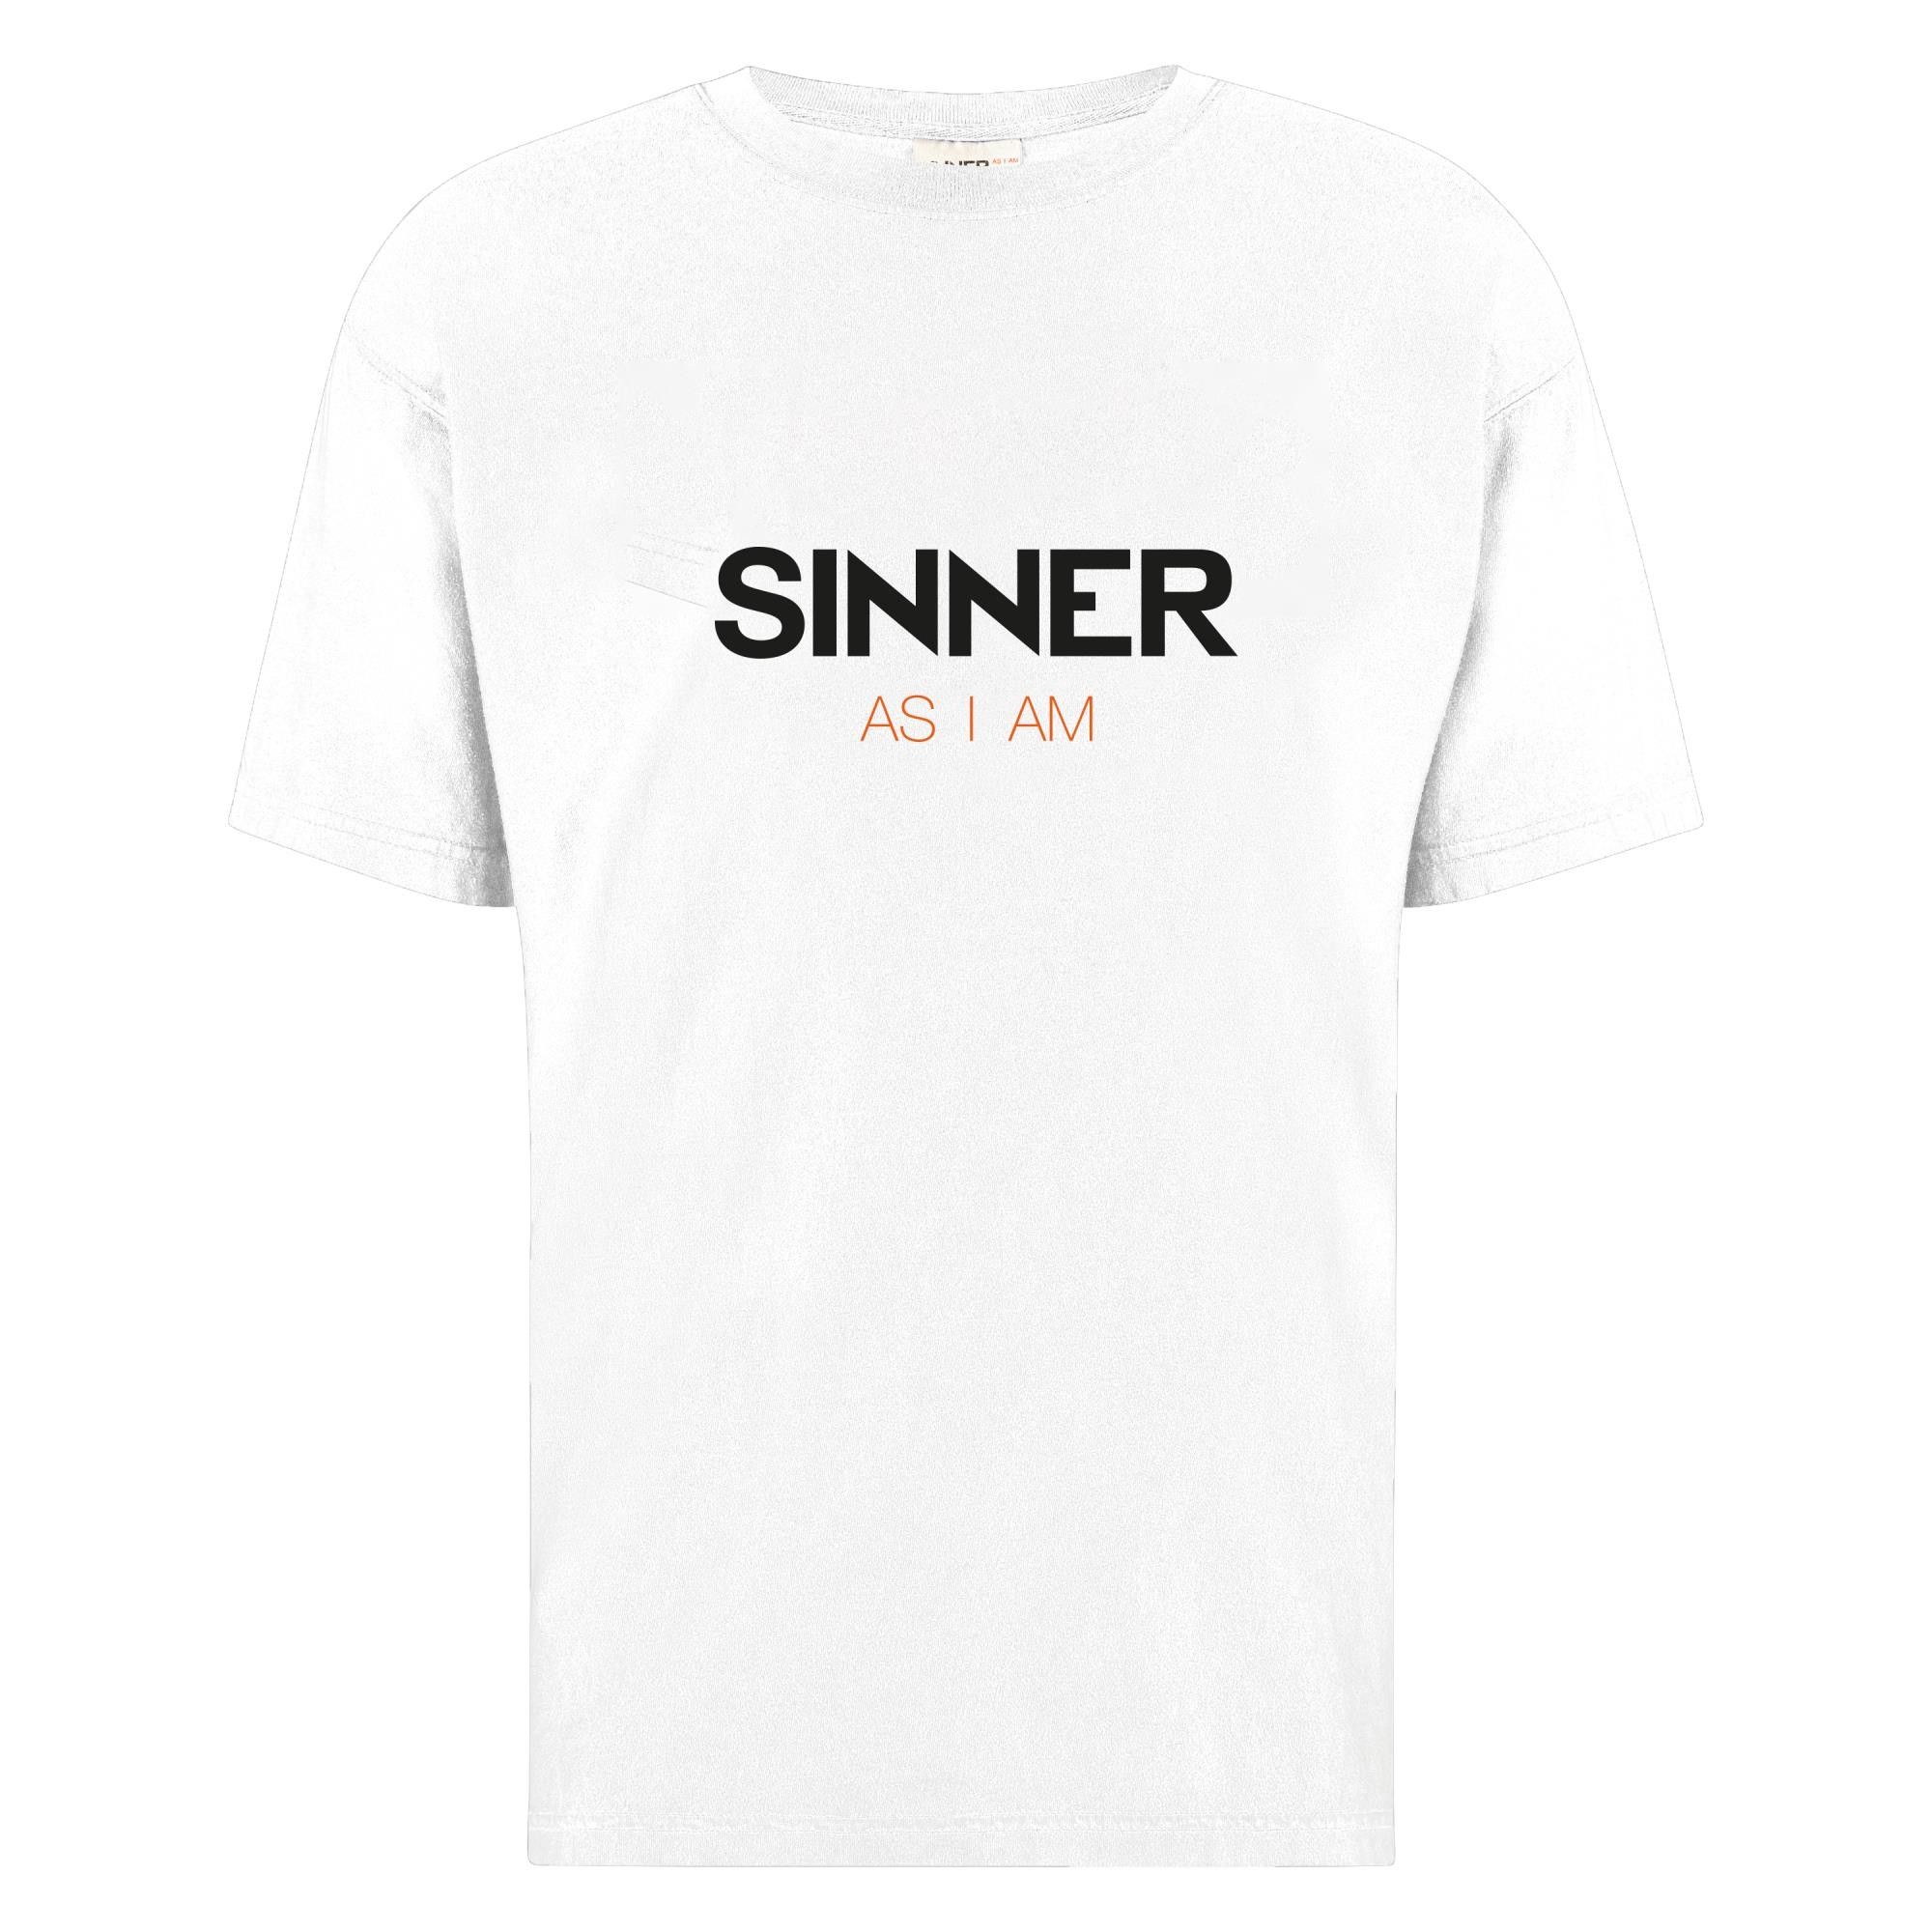 SINNER AS I AM - WIT kopen? | SINNER